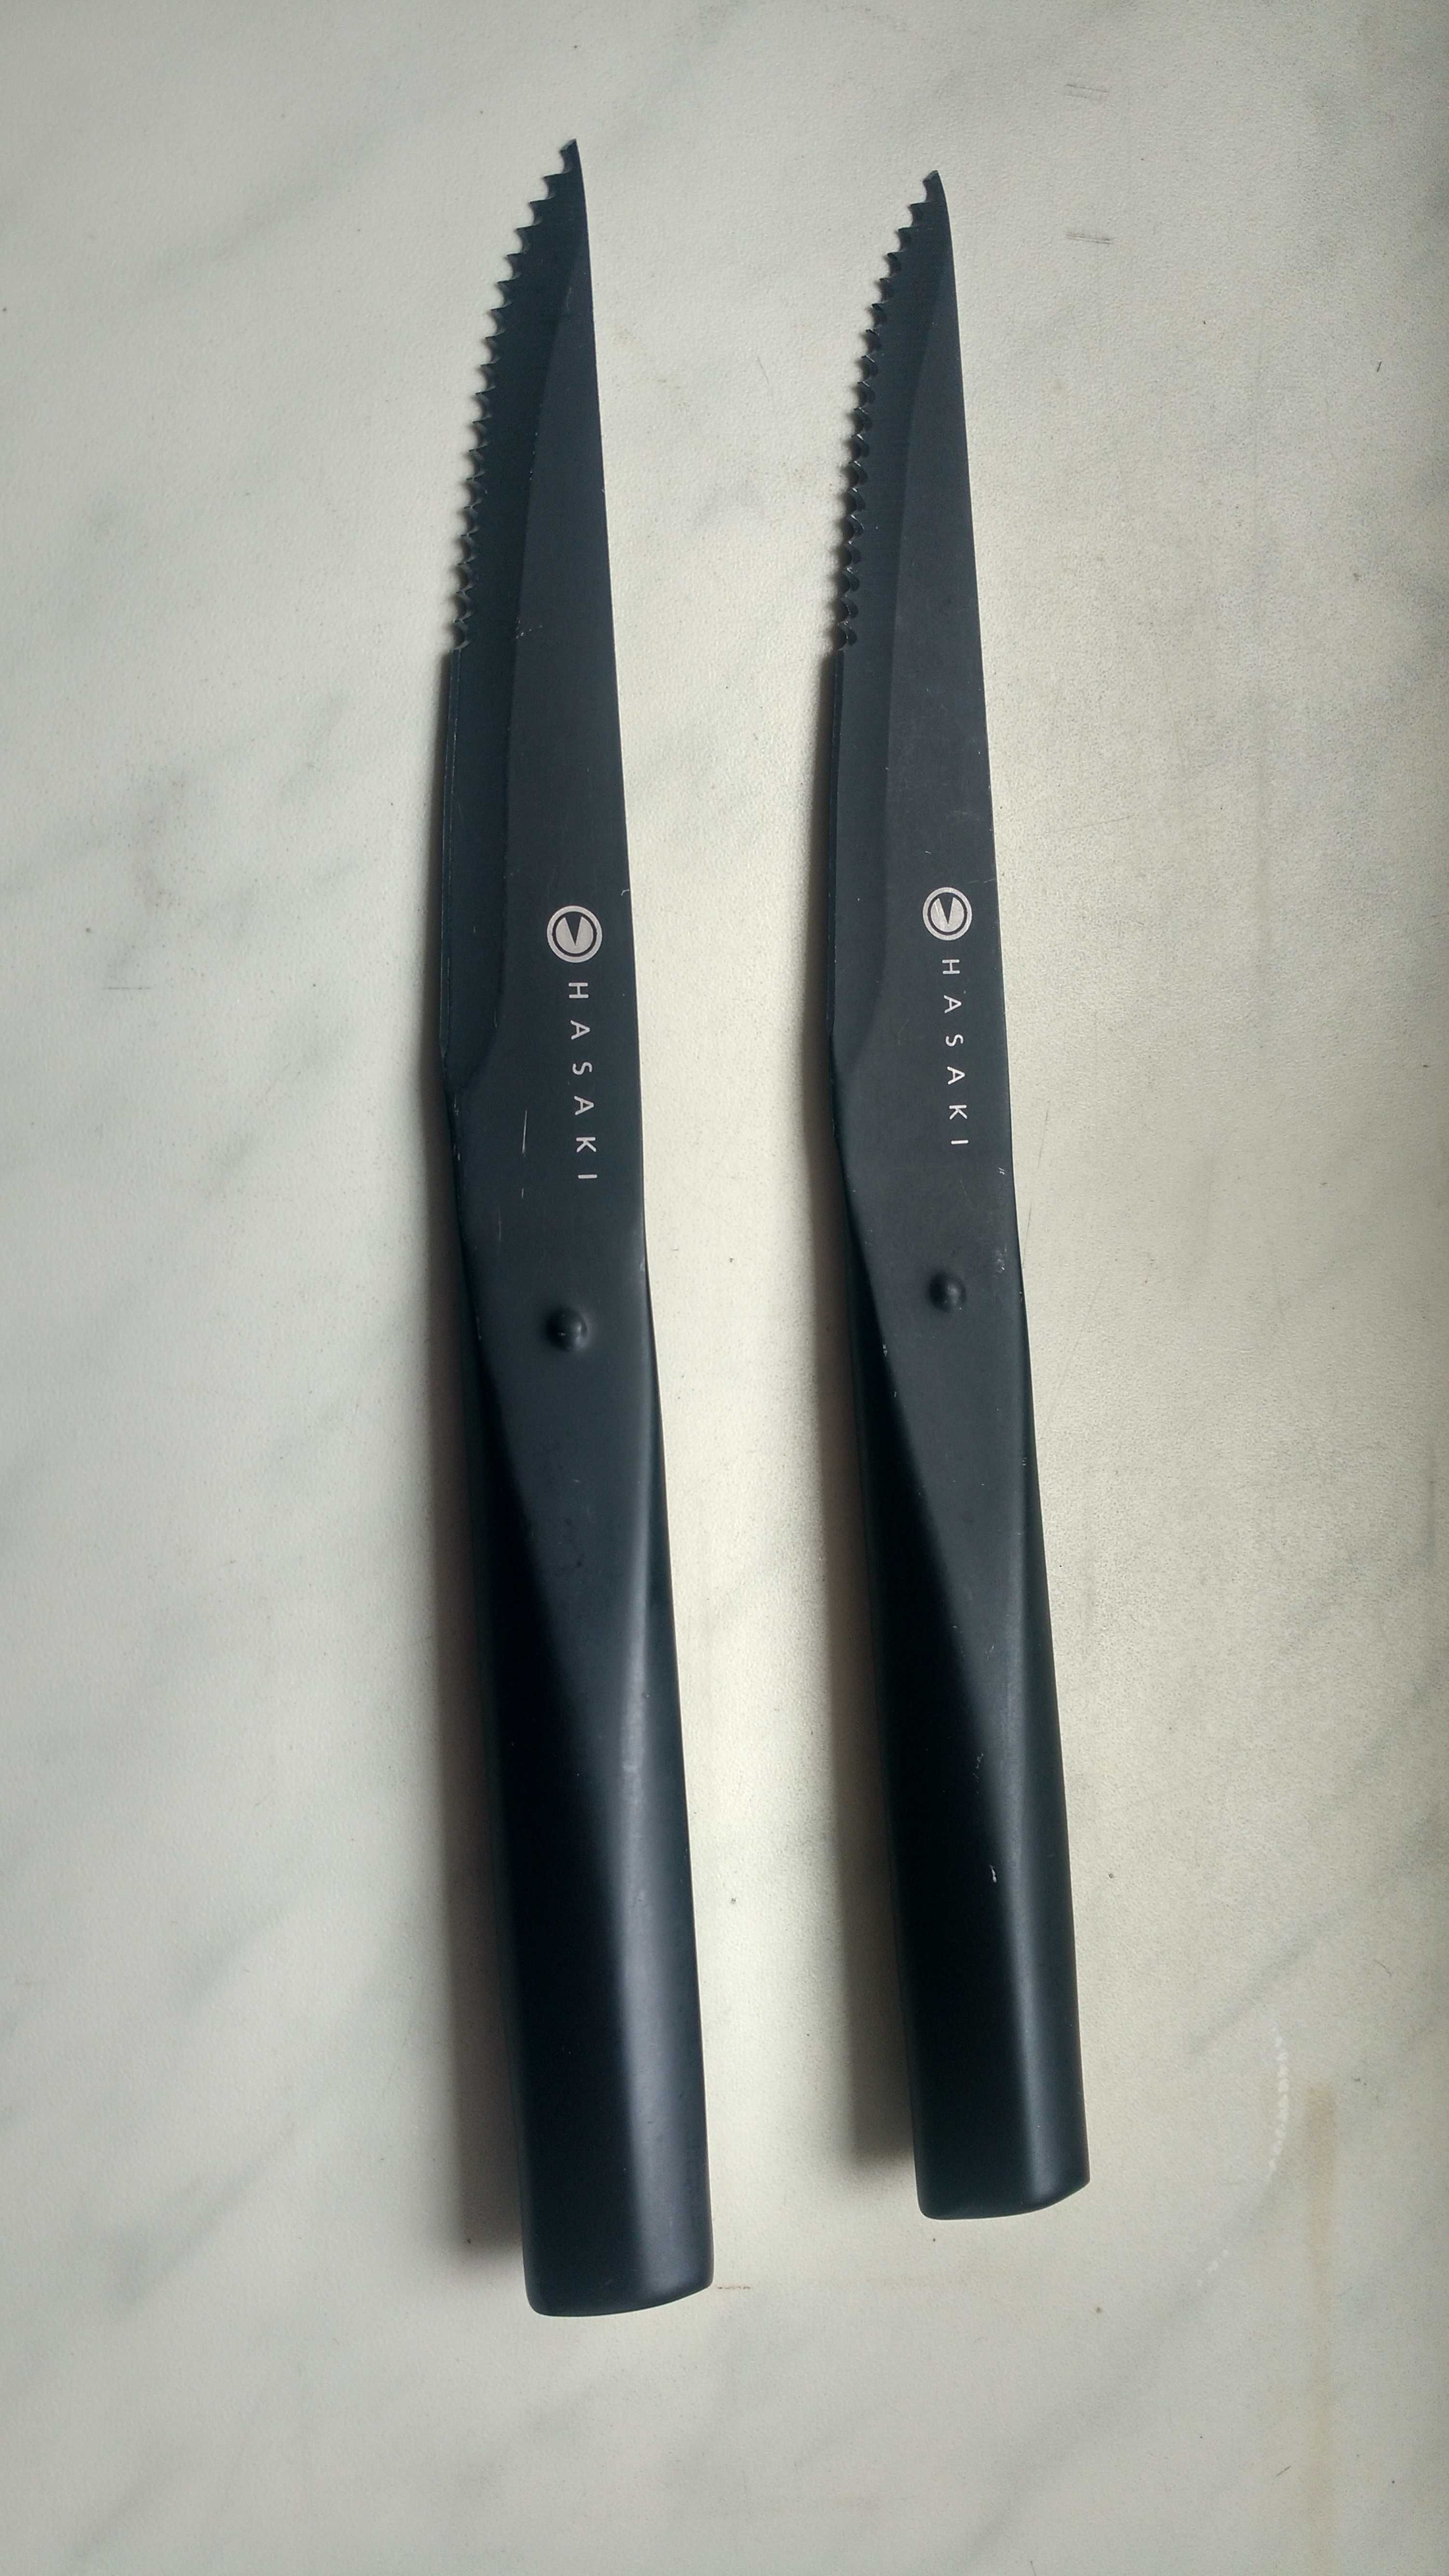 Nóż -Noże Hasaki Japan